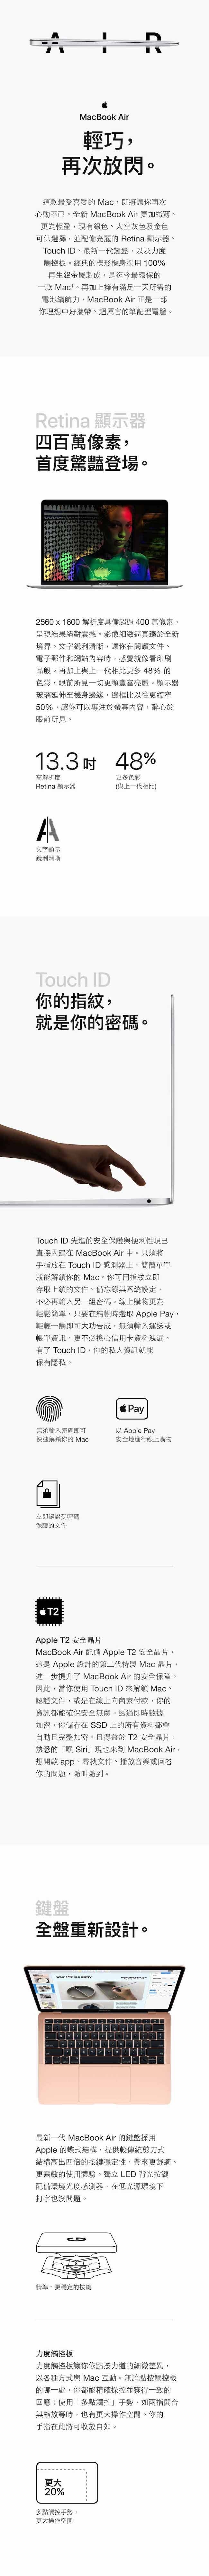 (福利品)Apple MacBook Air 13吋/i5/8GB/256GB